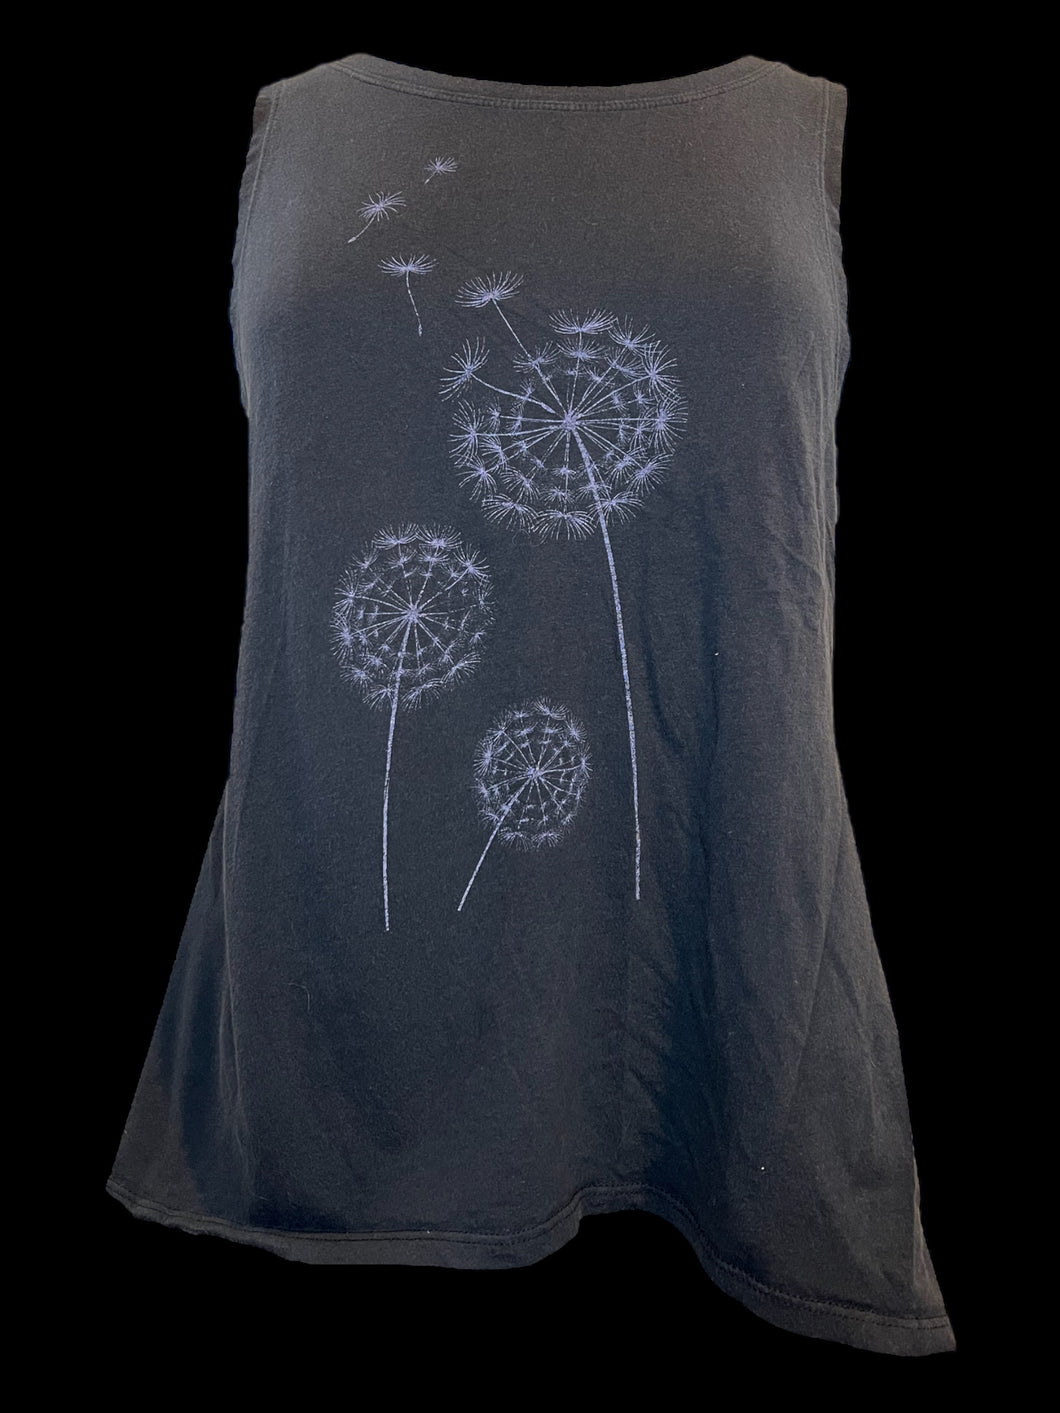 L Grey sleeveless open back top w/ dandelion puff graphic